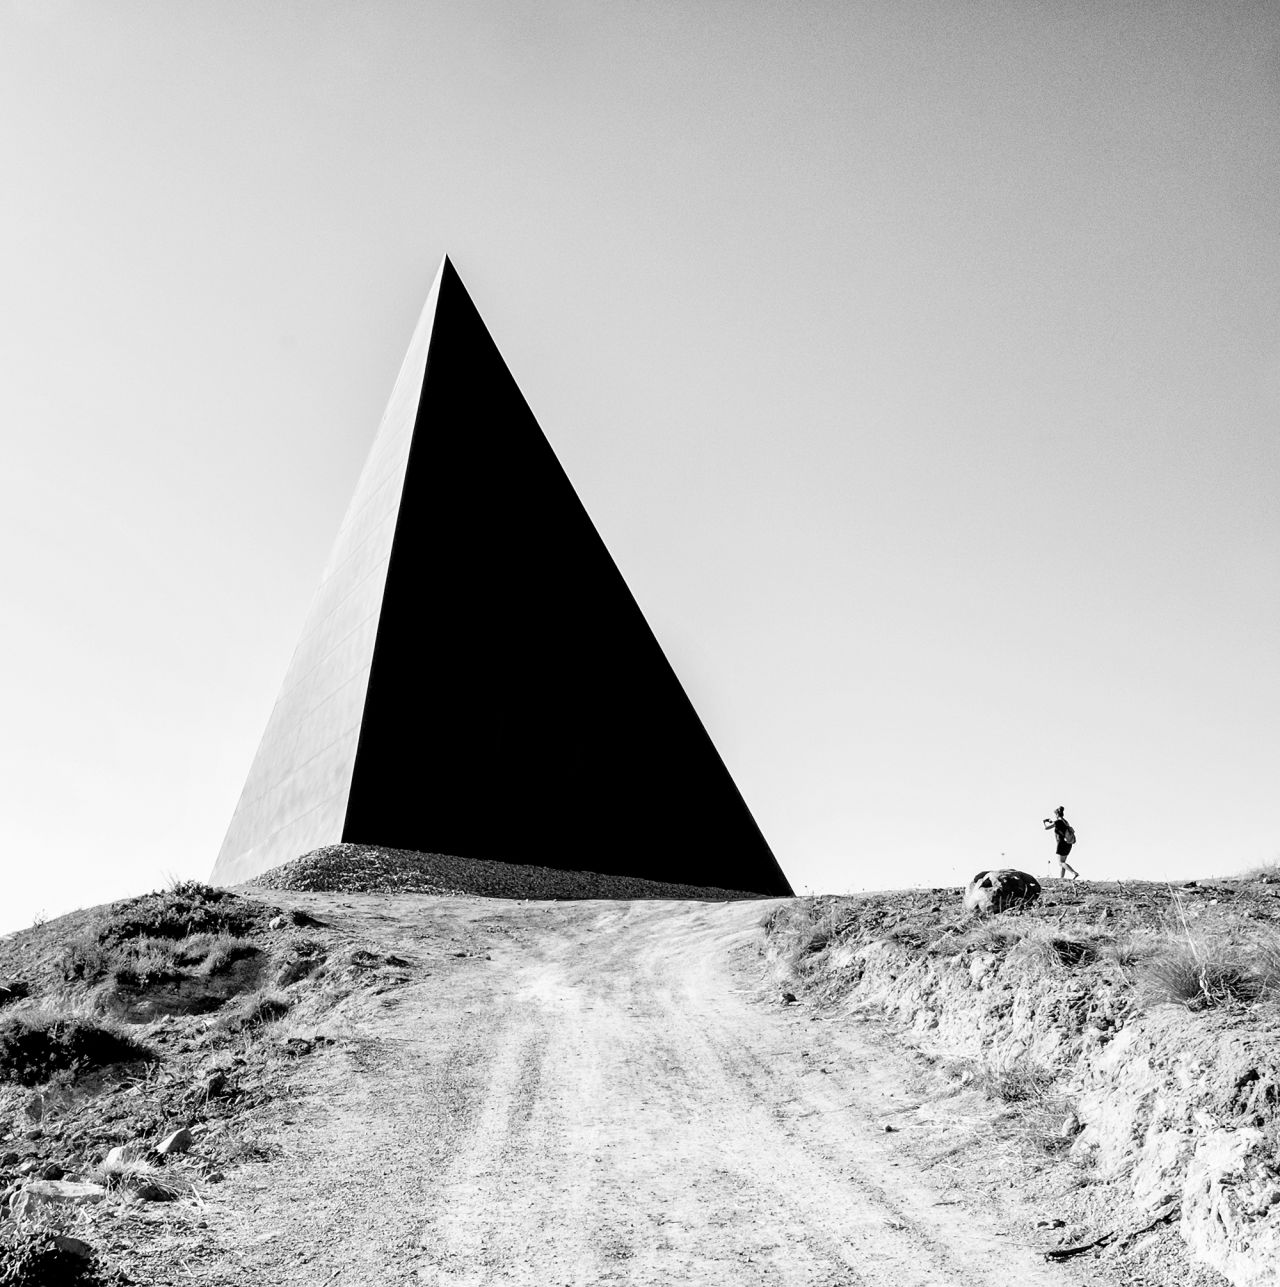 Rosaria Sabrina Pantano's image of a pyramid-shaped sculpture standing at the 38th parallel, a circle of latitude that passes through Sicily, Italy.